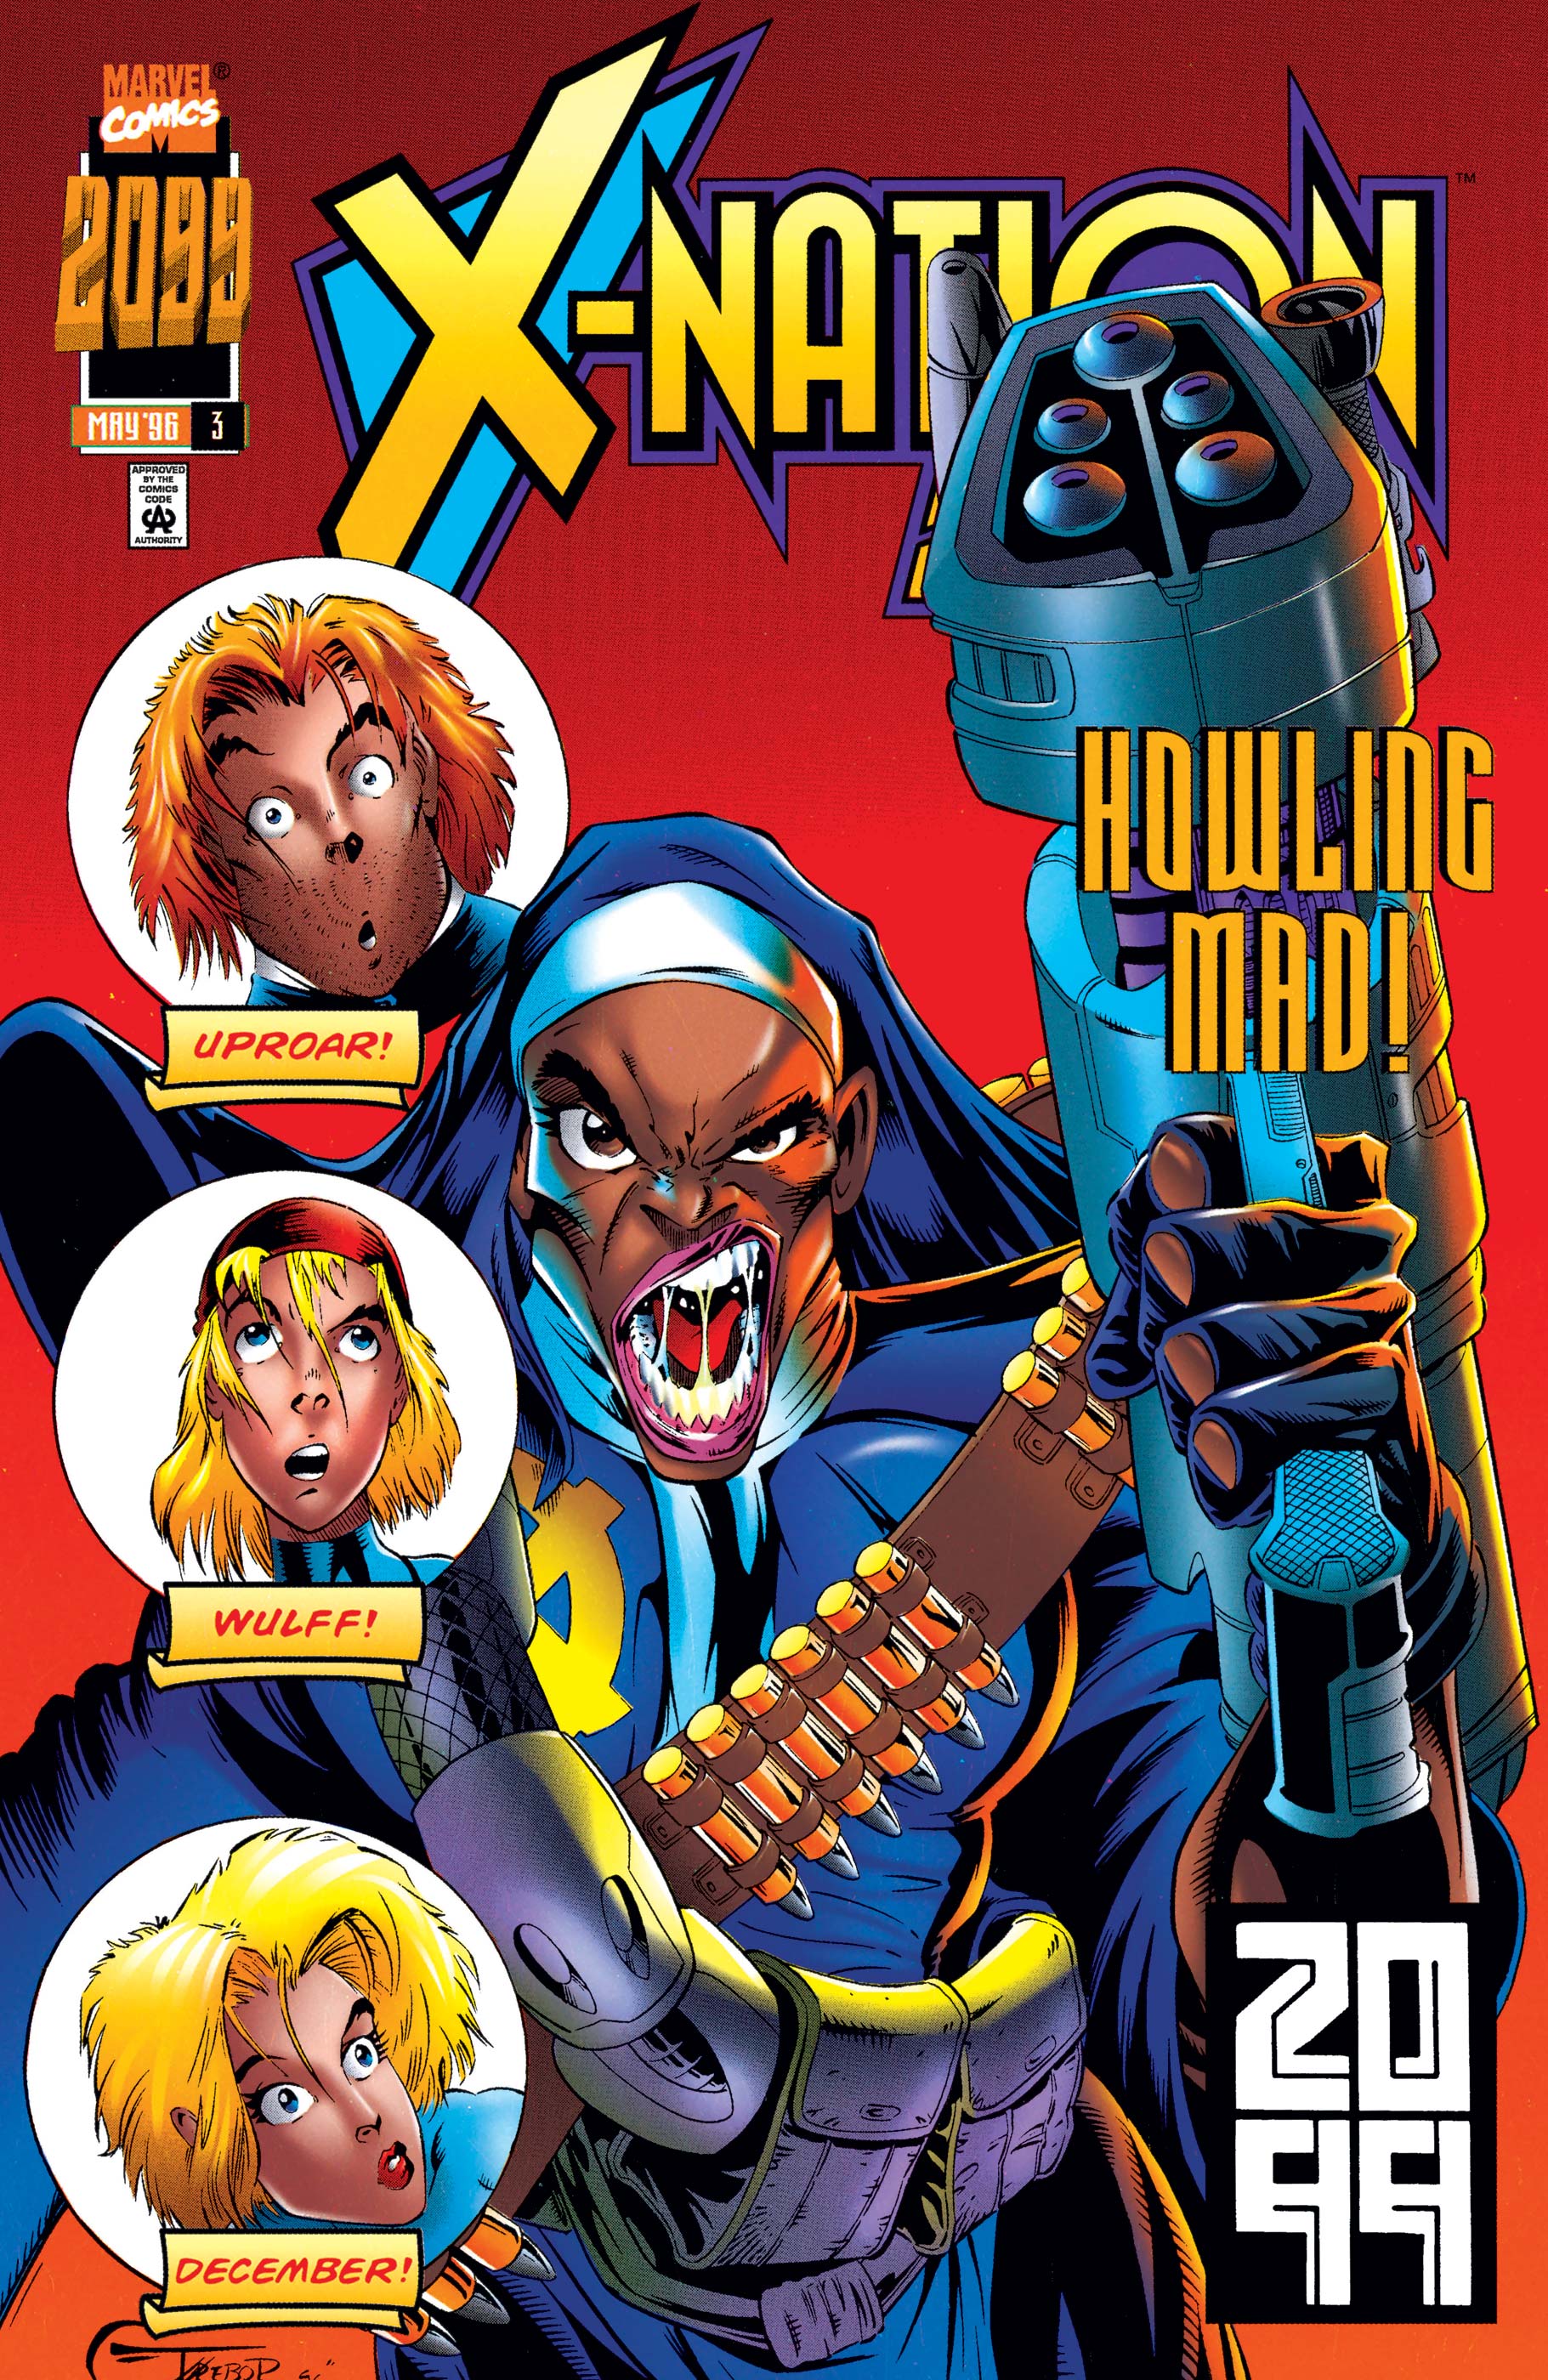 X-Nation 2099 (1996) #3